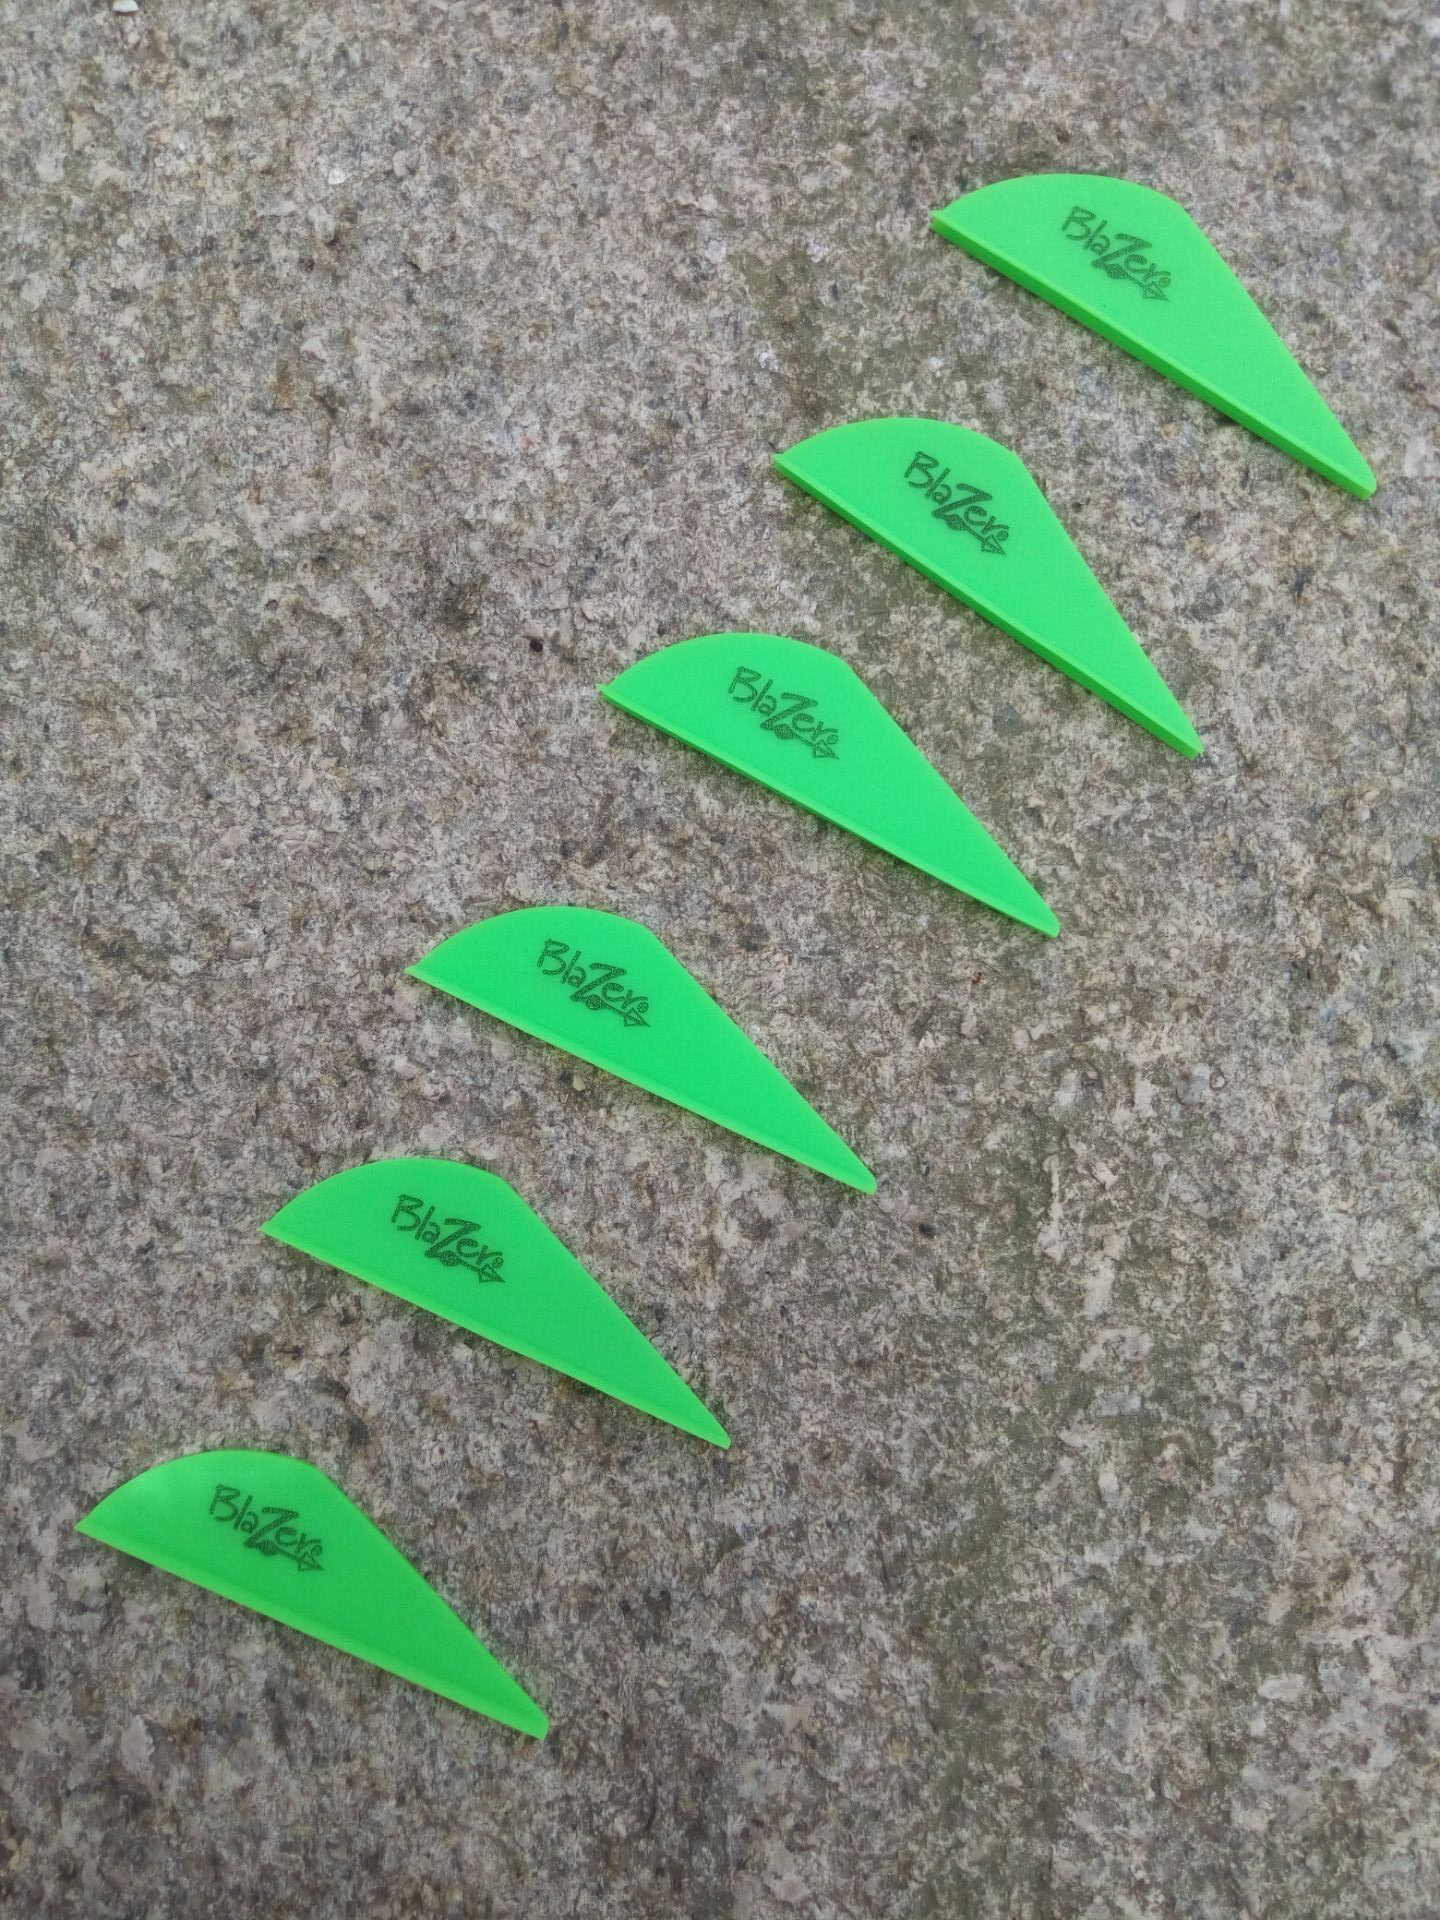 Archery green Blazer vanes